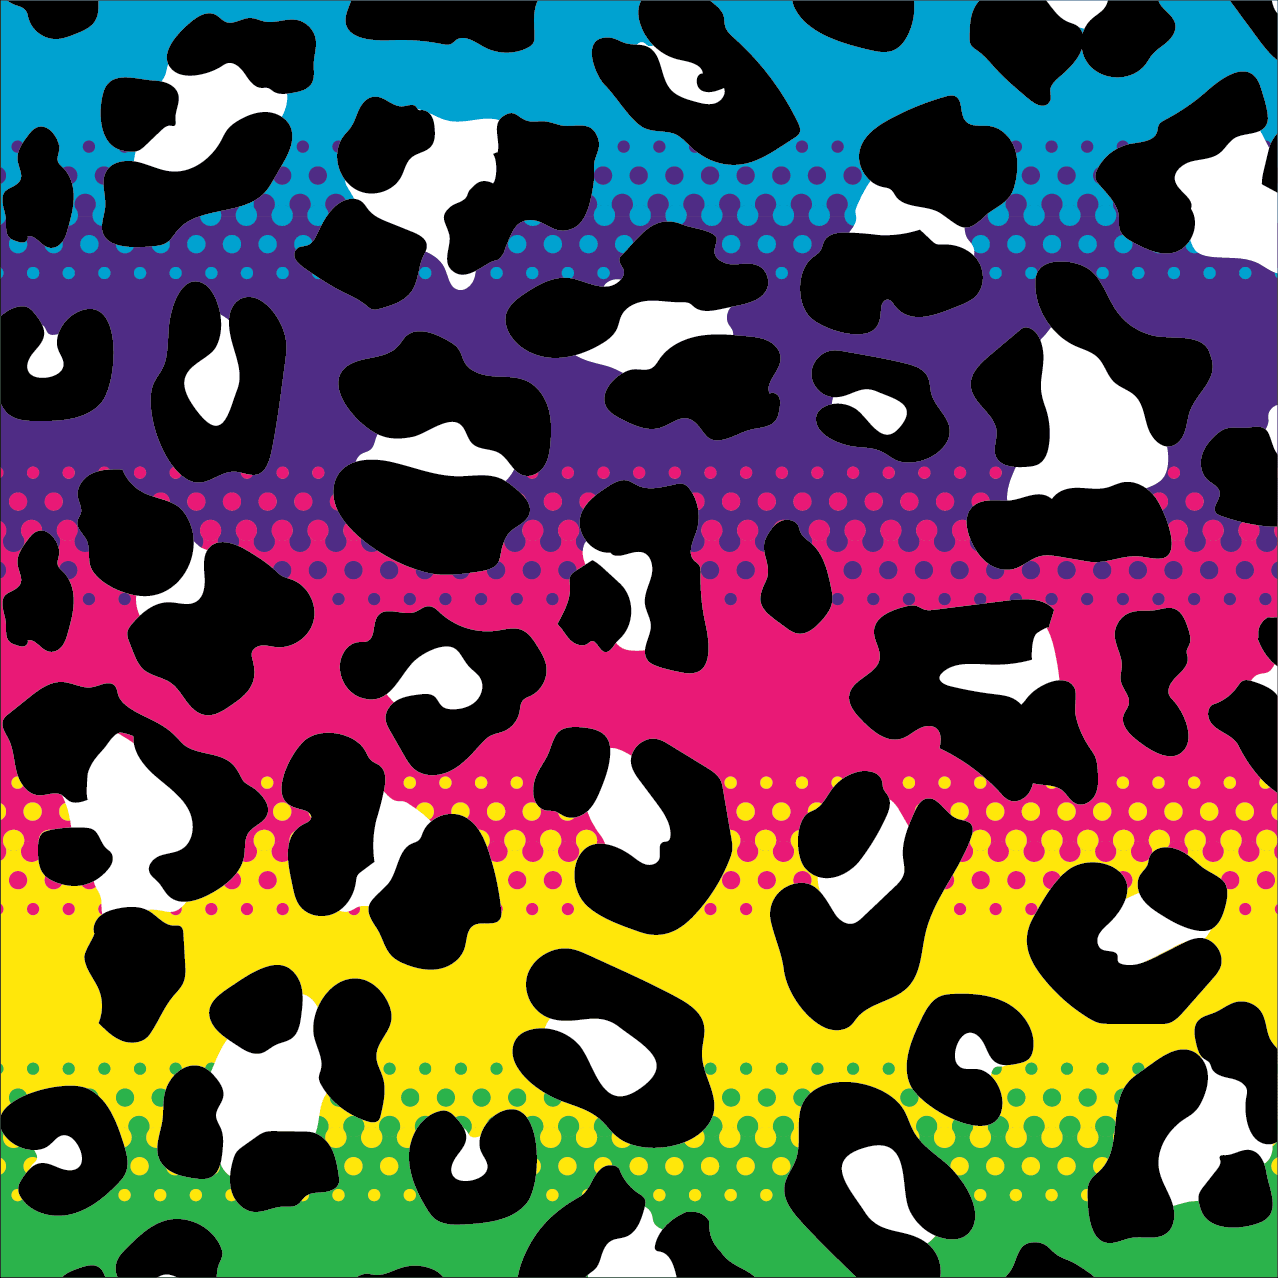 PREORDER Rainbow Leopard Print Ankle Socks - FootClothes